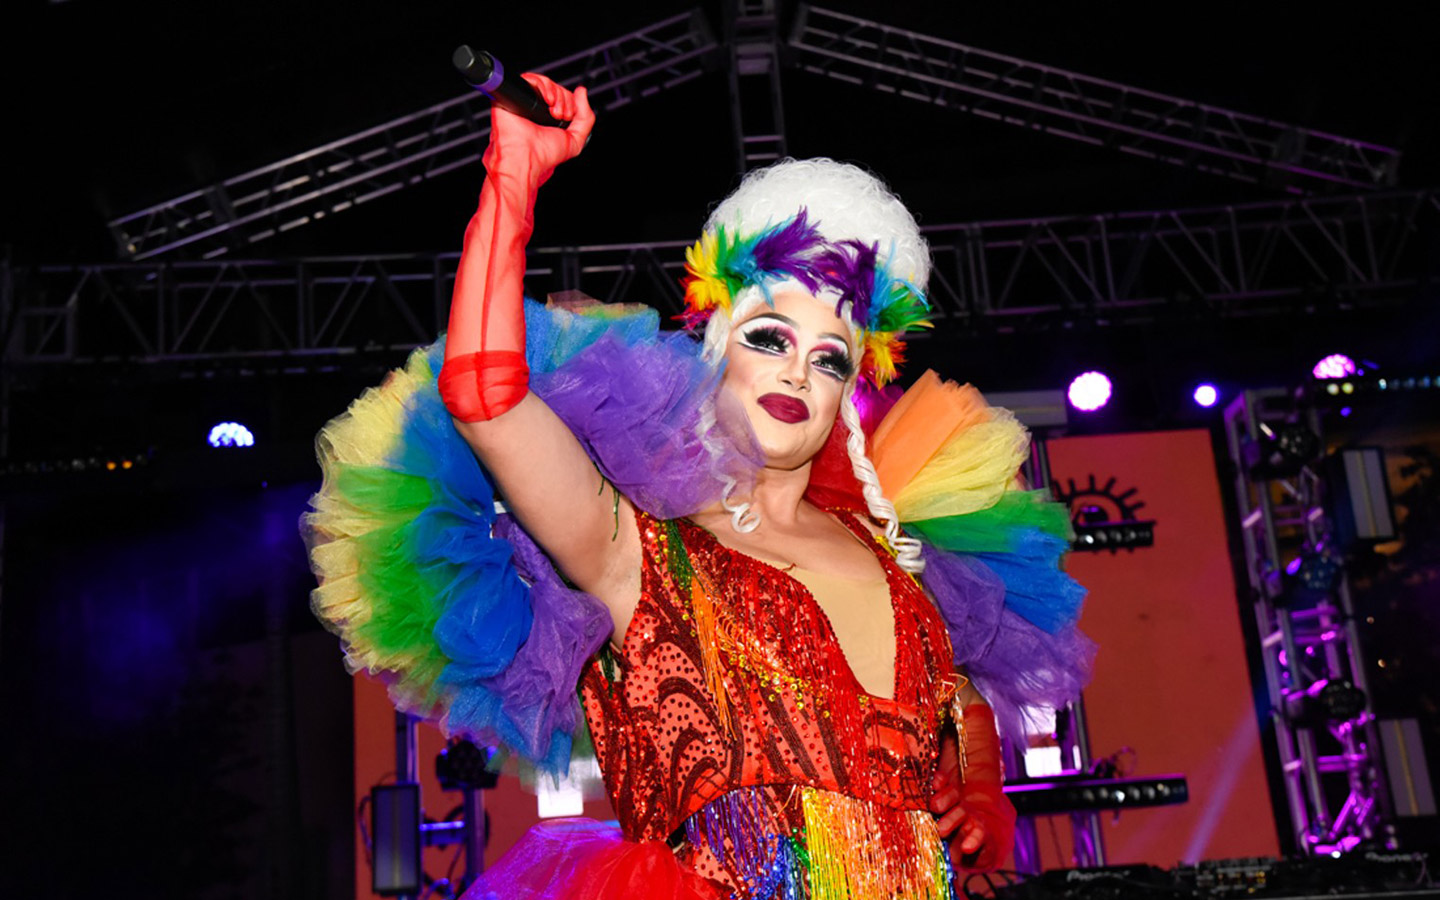 Regina nei colori arcobaleno al Wynwood Pride